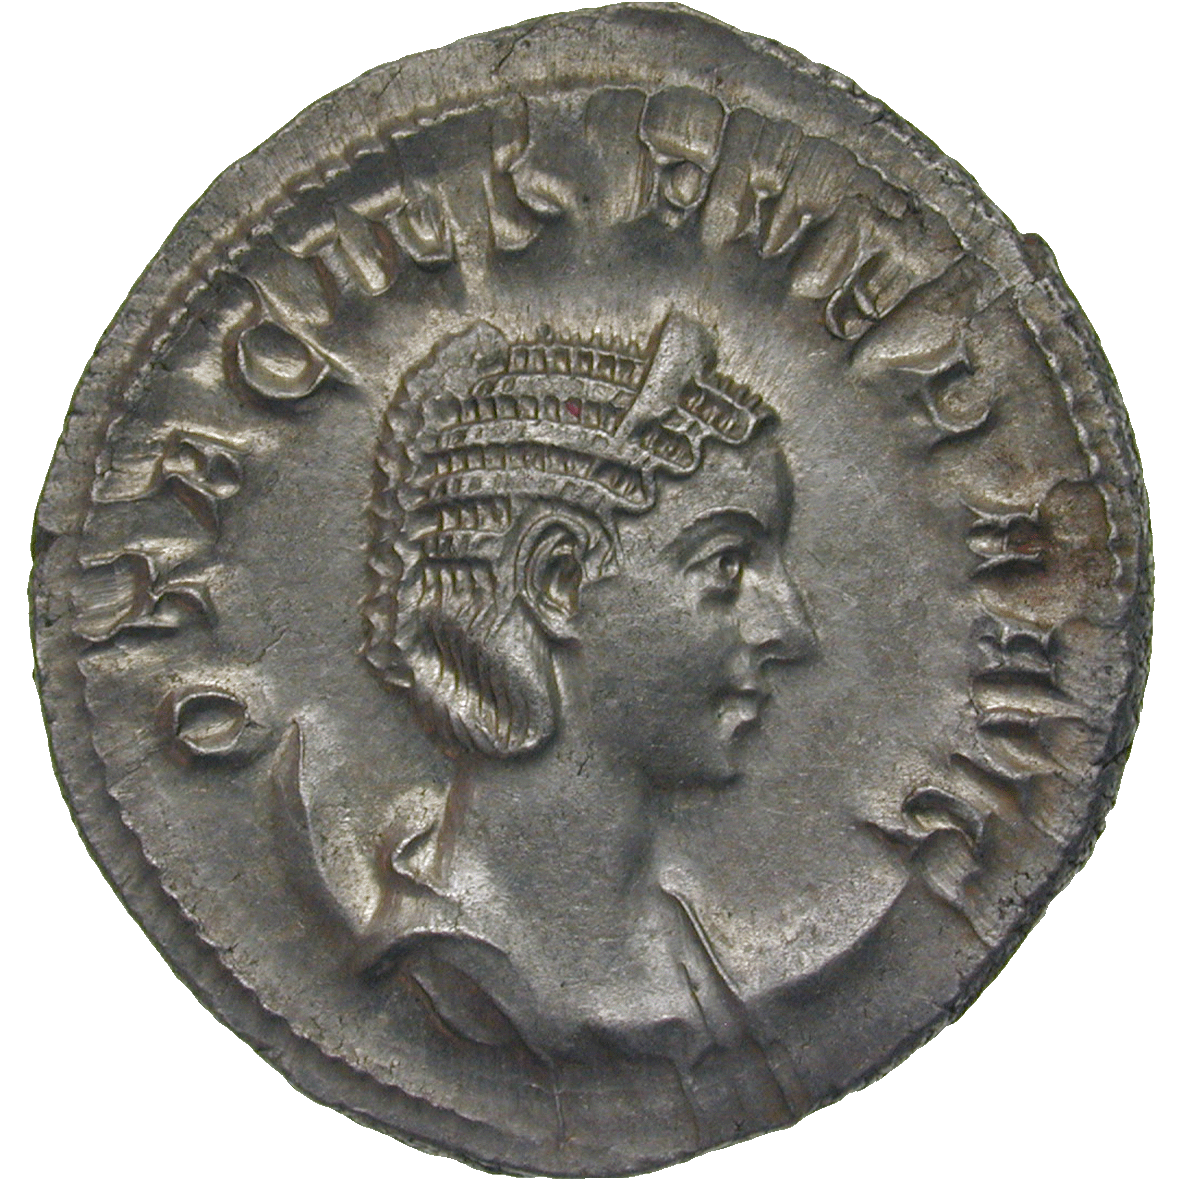 Roman Empire, Philip the Arab for Otacilia Severa, Denarius (obverse)